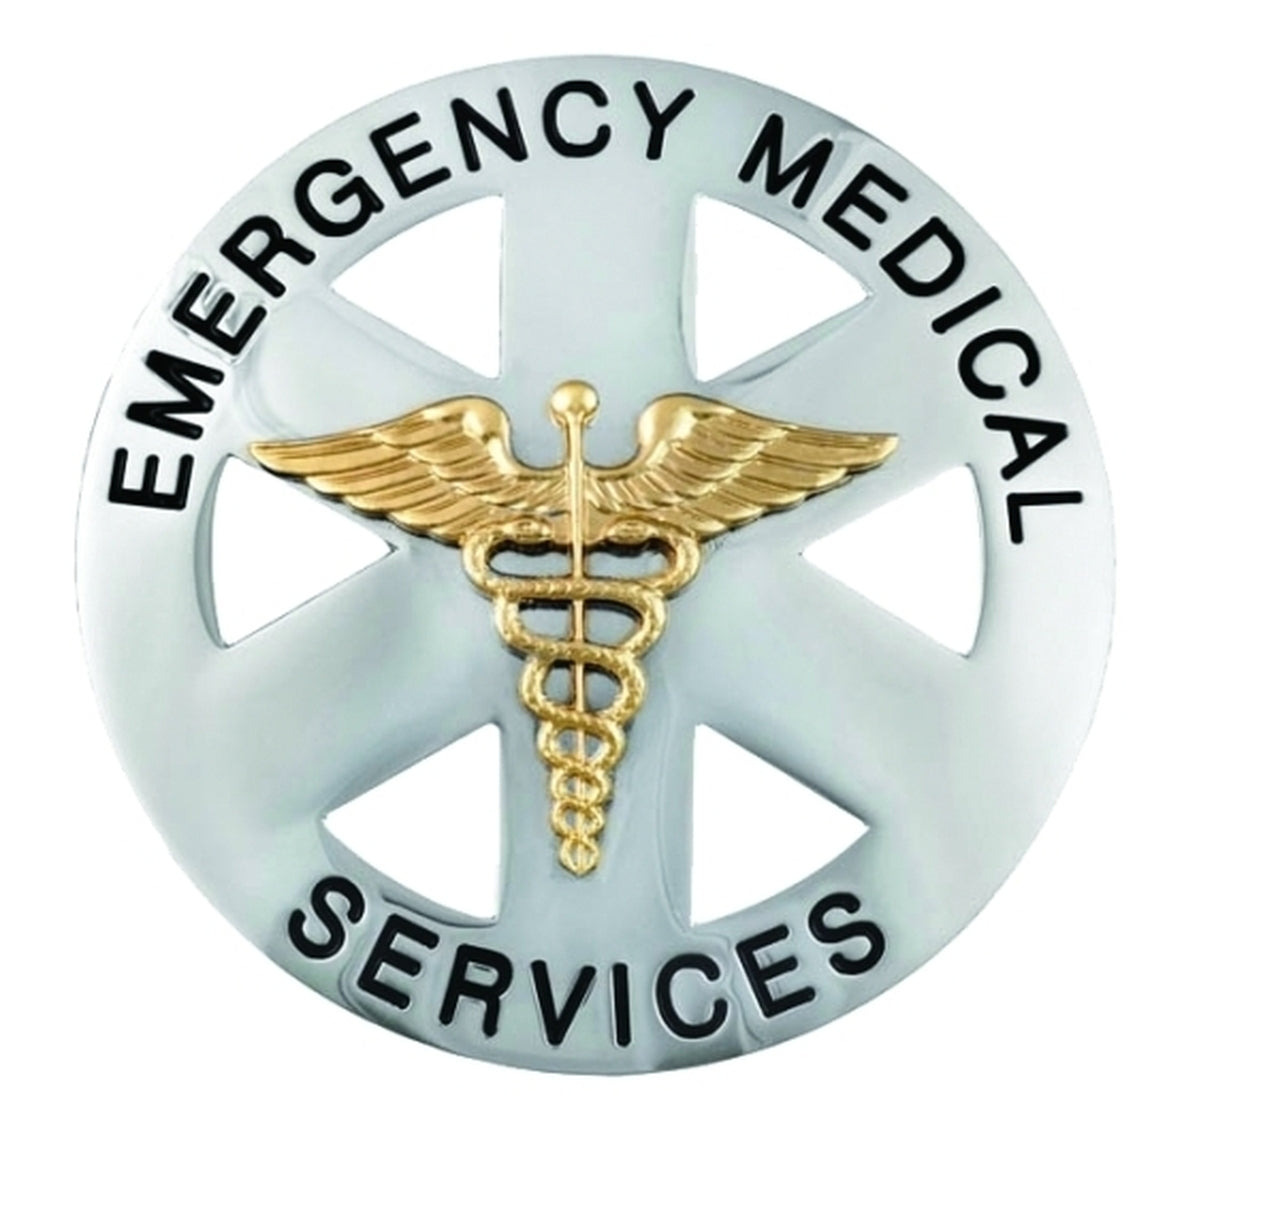 'Emergency Medical Services' Badge